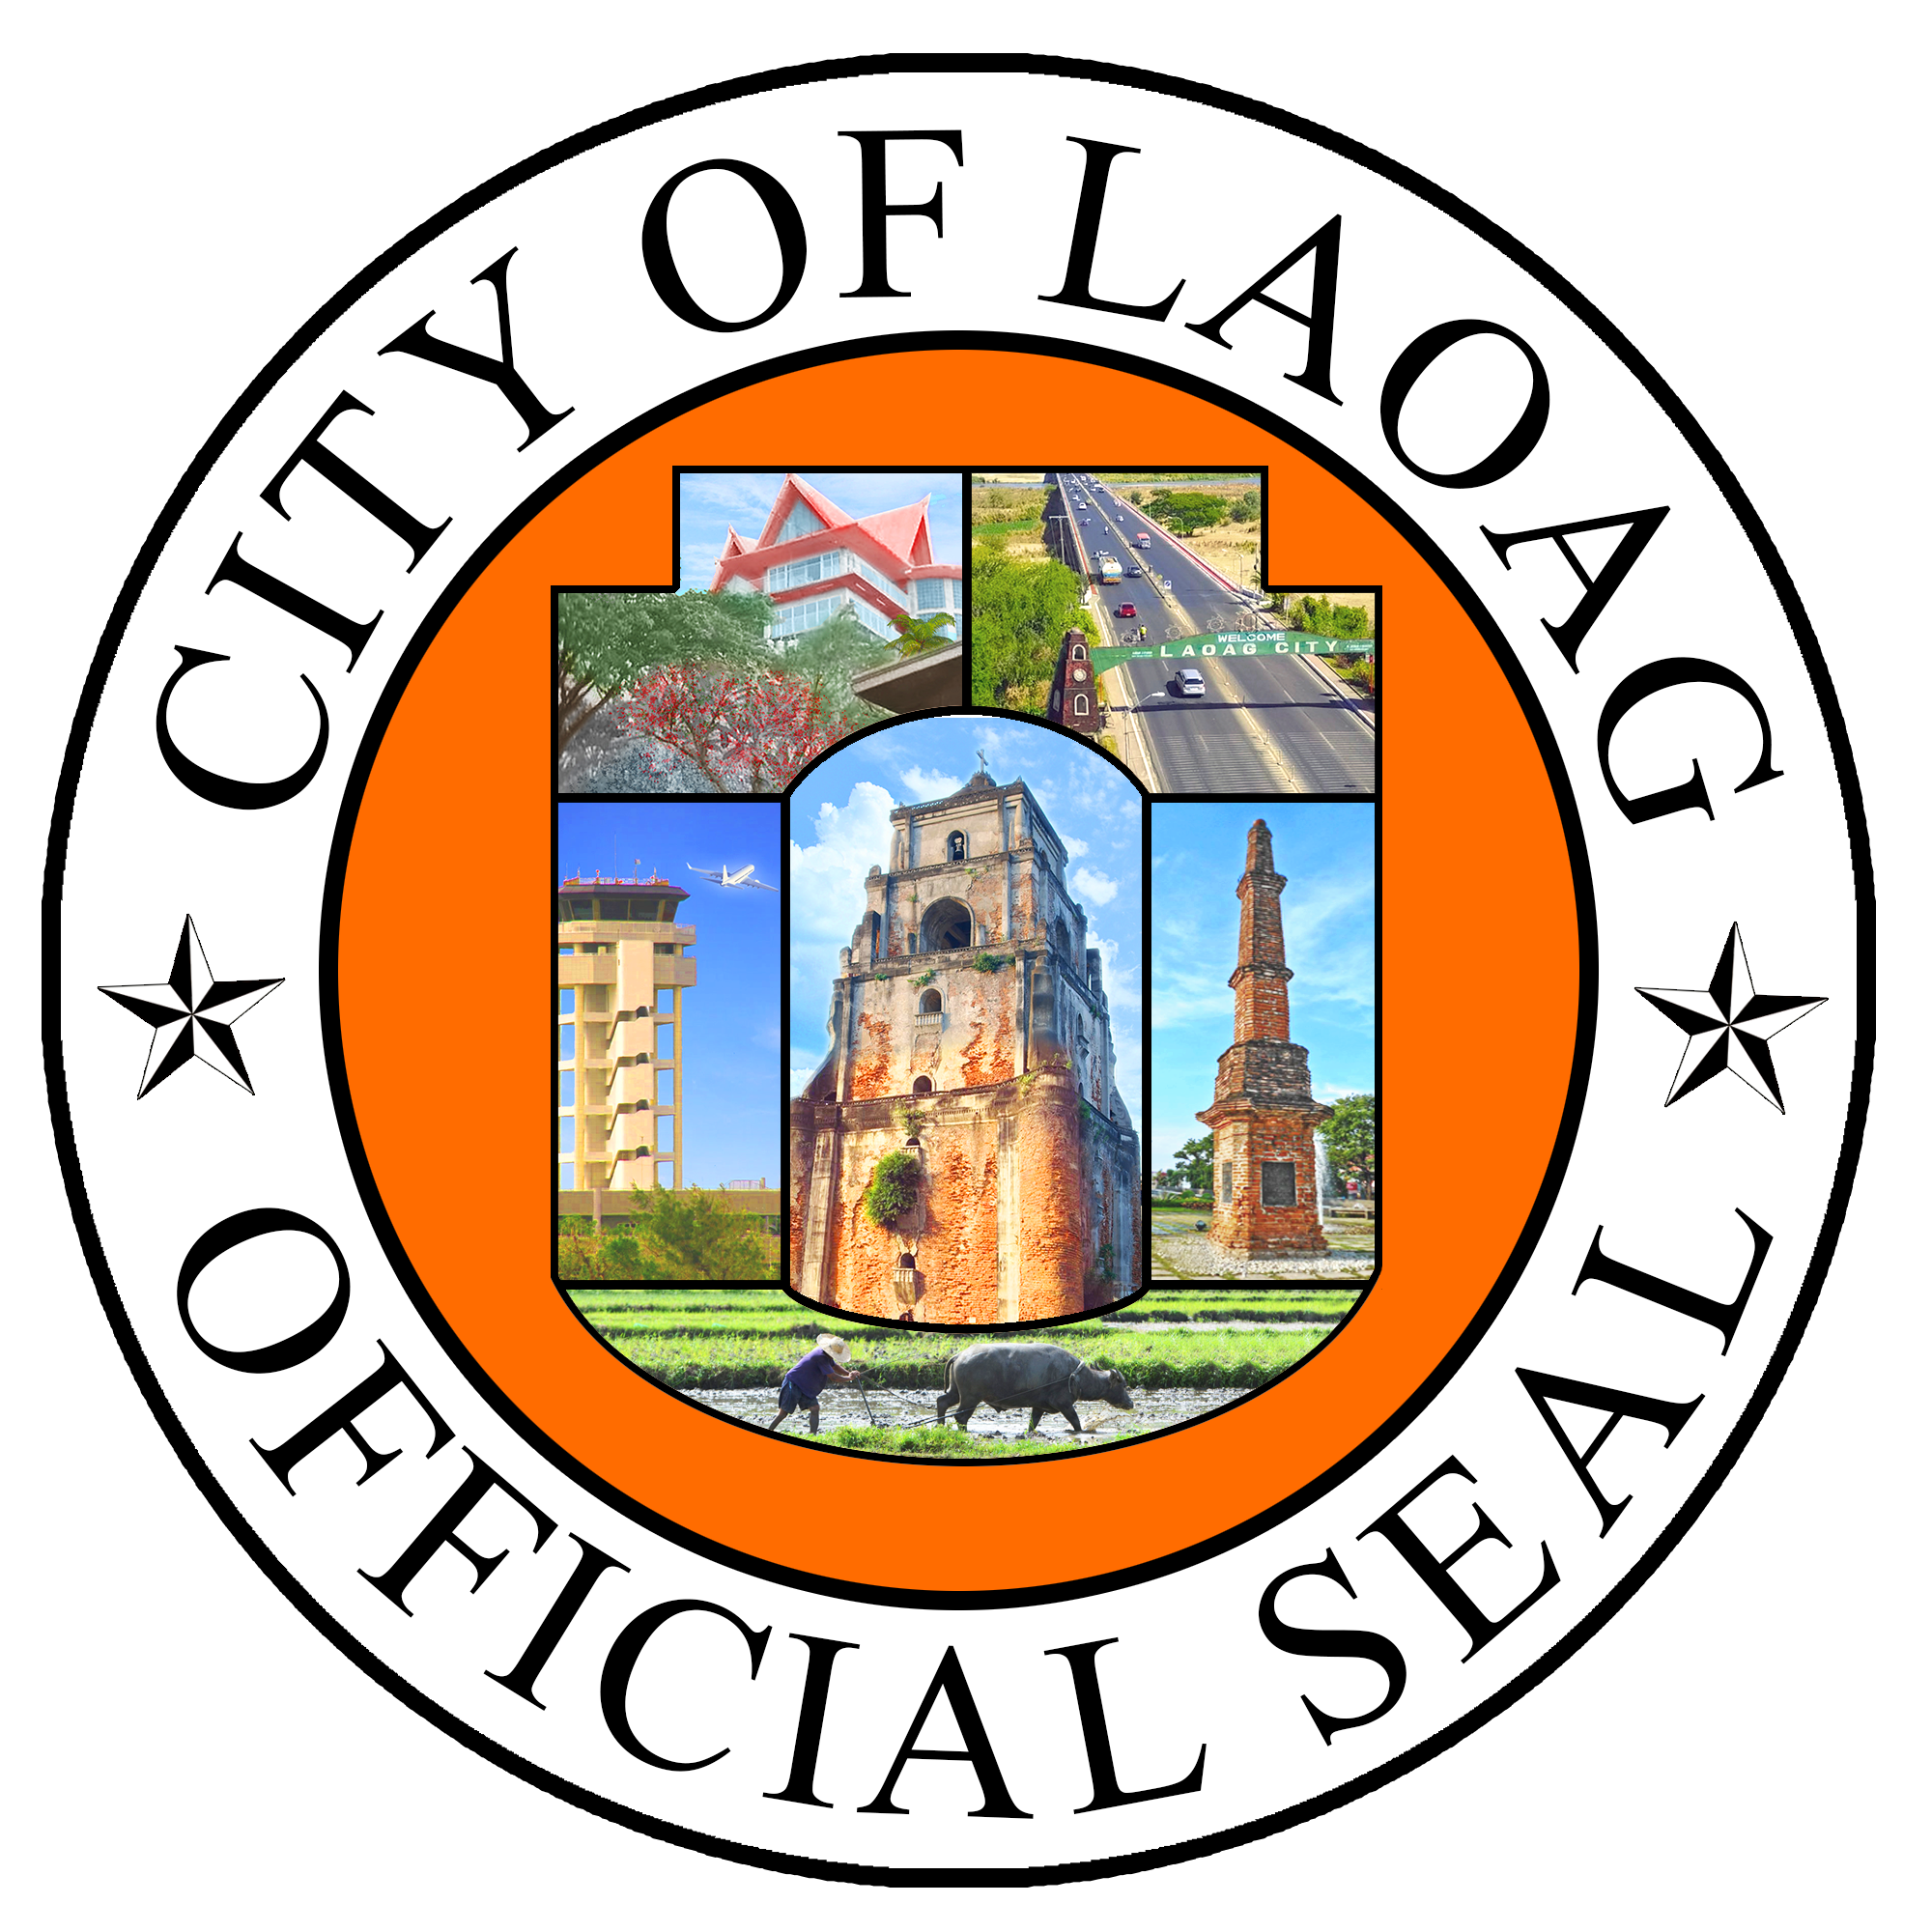 department of tourism laoag city